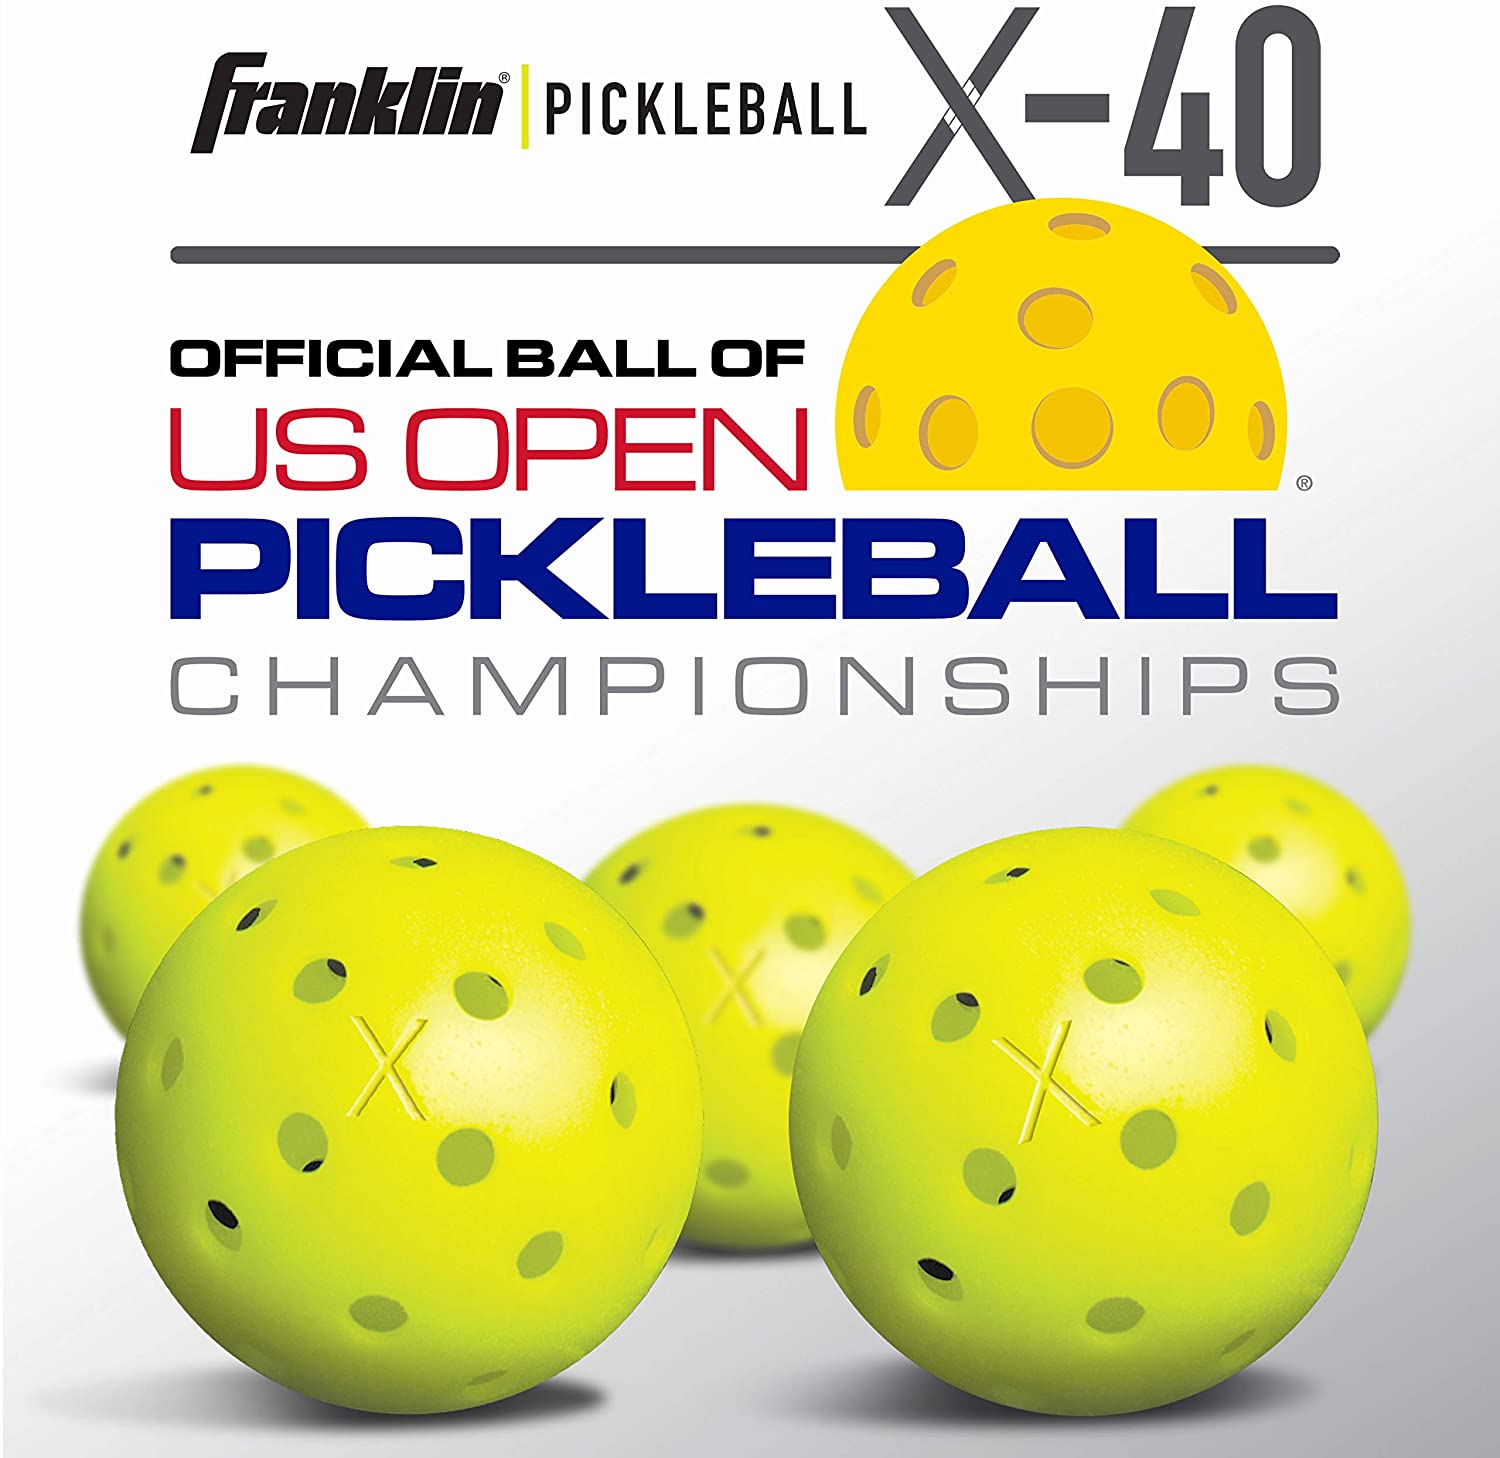 Franklin X-40 Outdoor Pickleball Balls by Franklin.